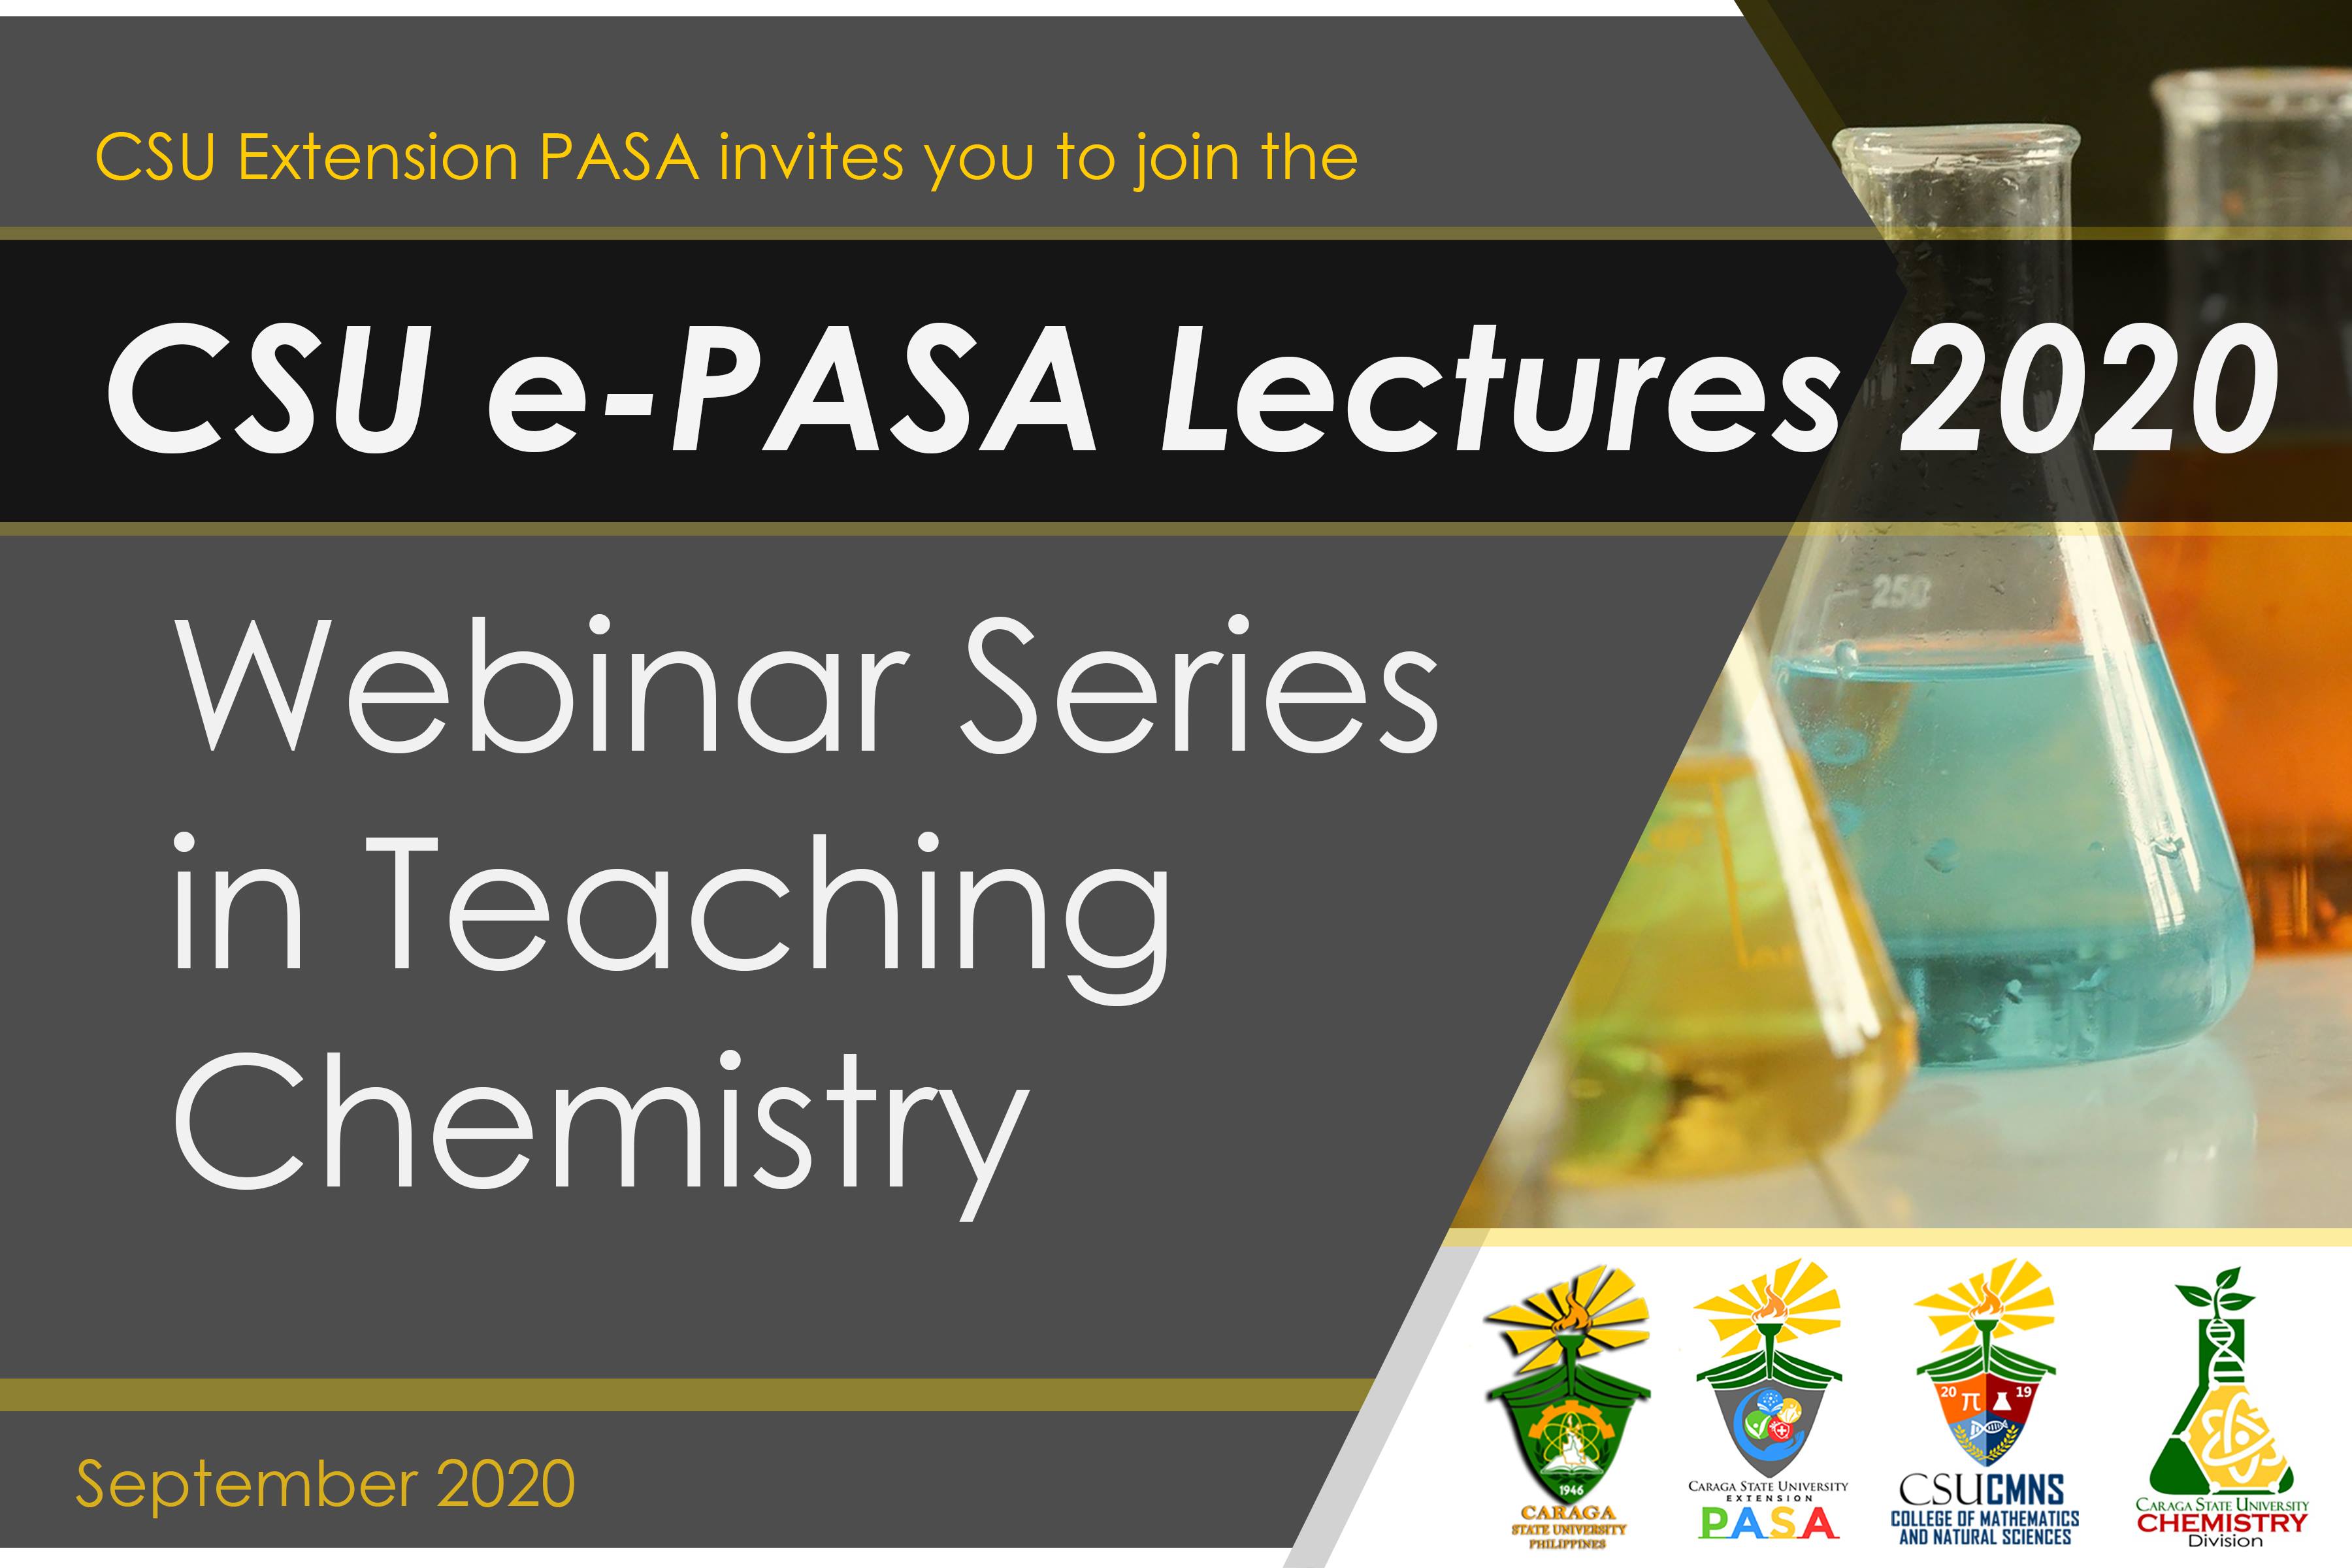 CSU e-PASA invites you to the Webinar series in teaching chemistry. September 2020